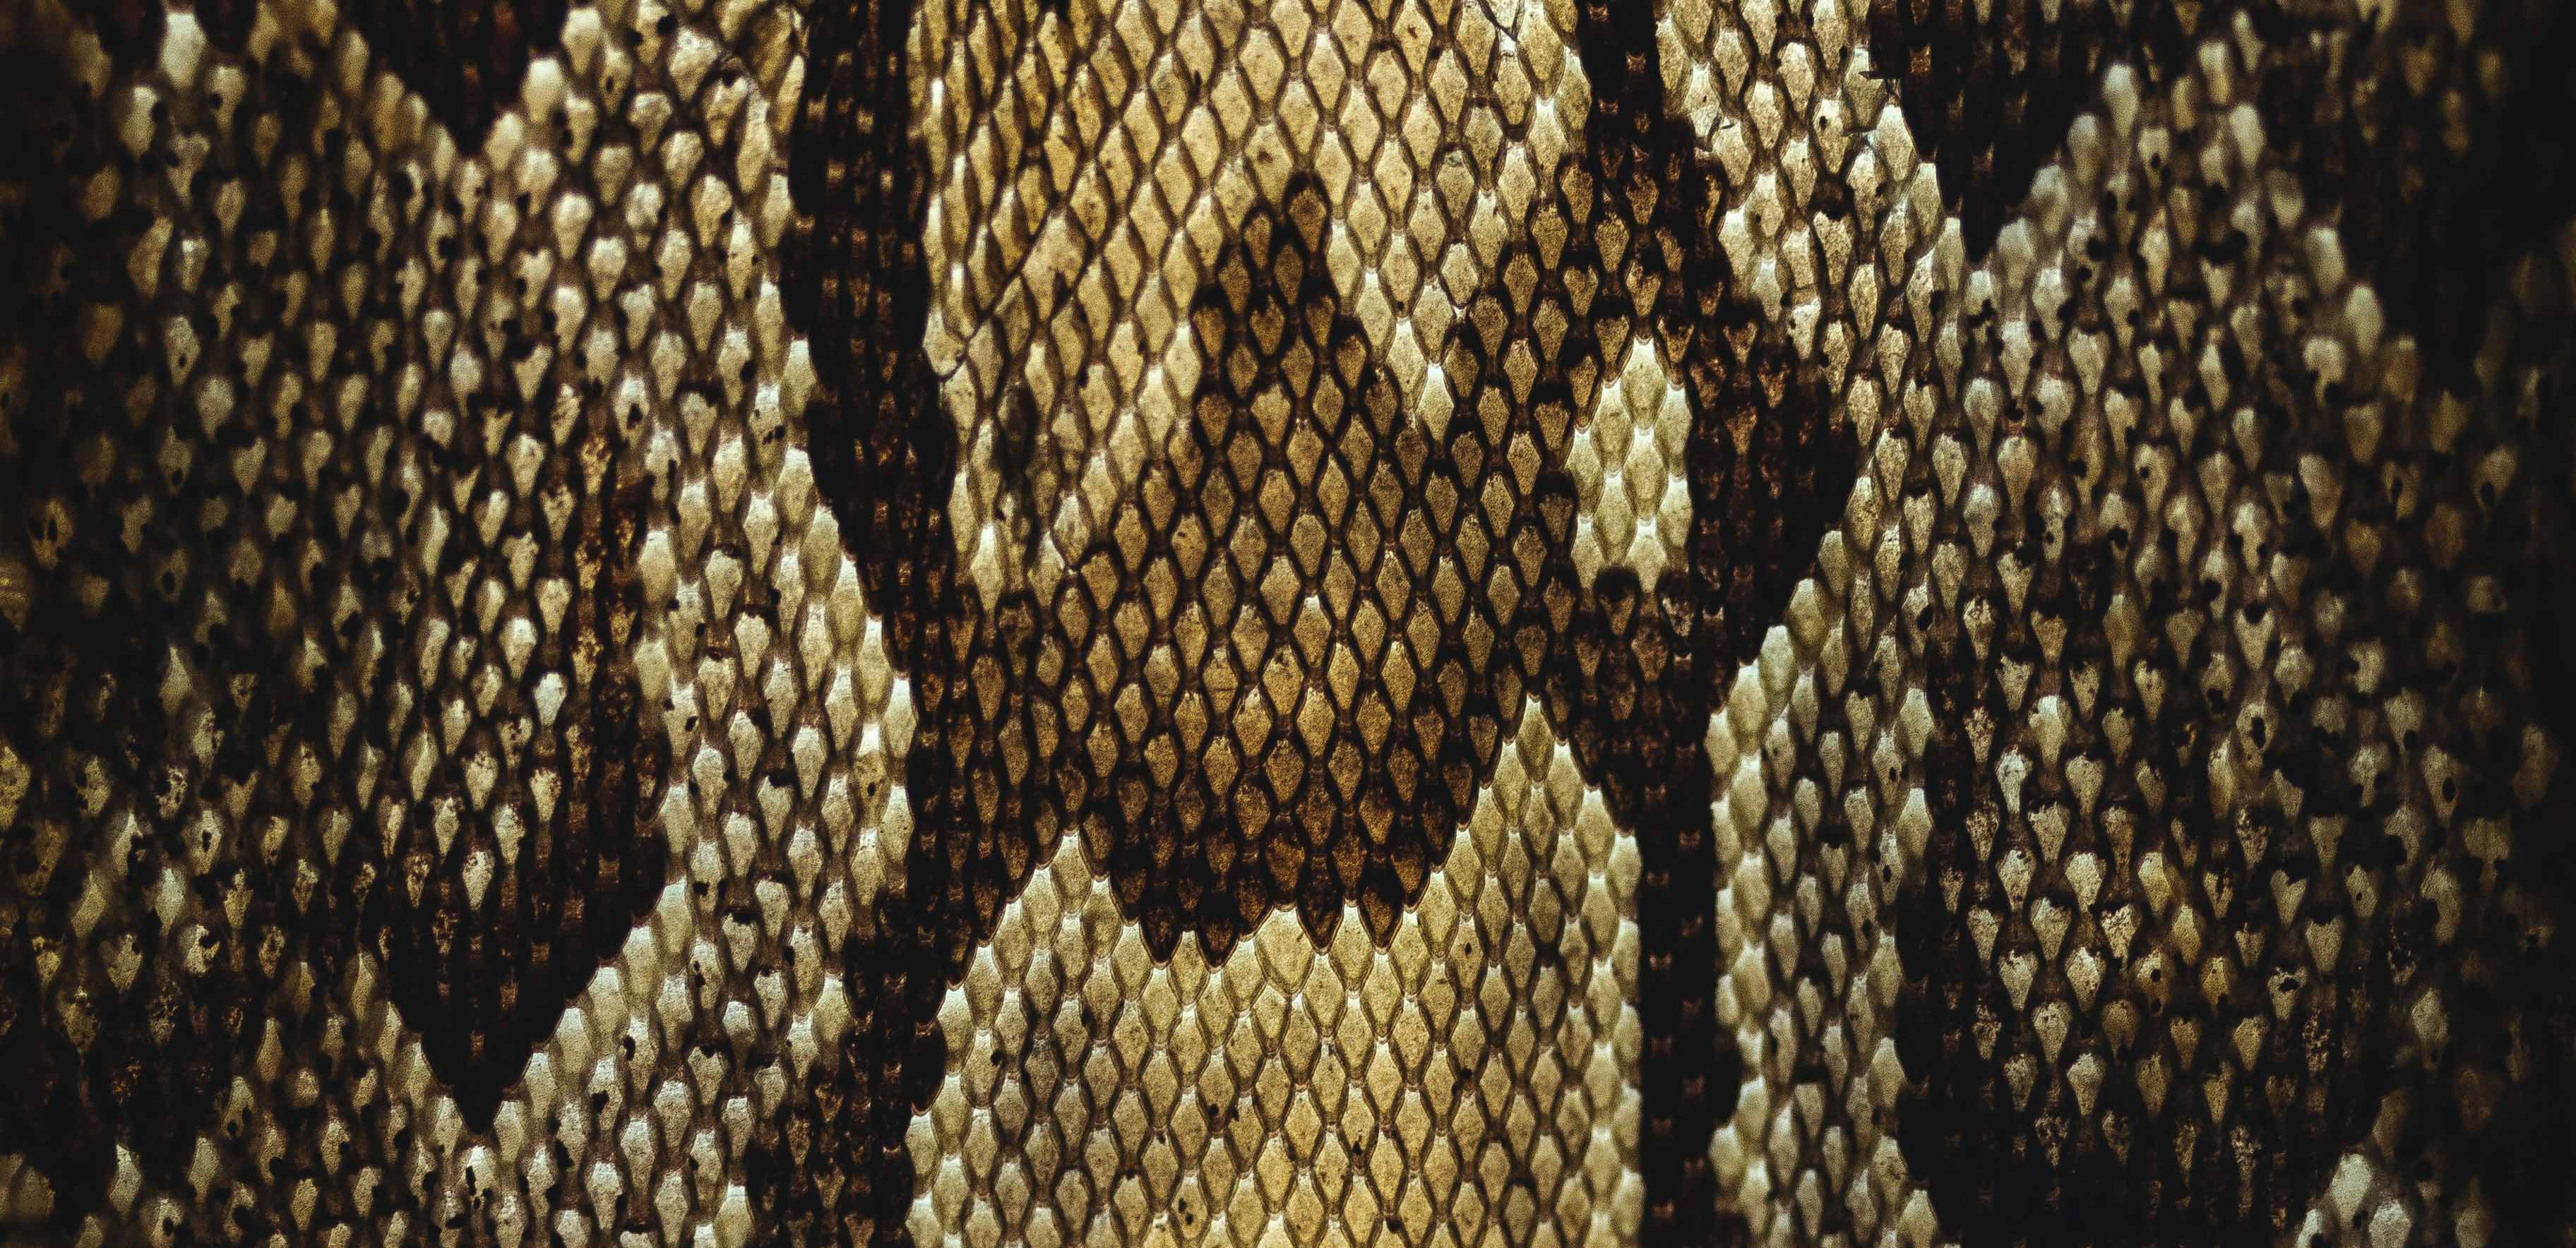 Snake skin Photo by Trollinho on Unsplash